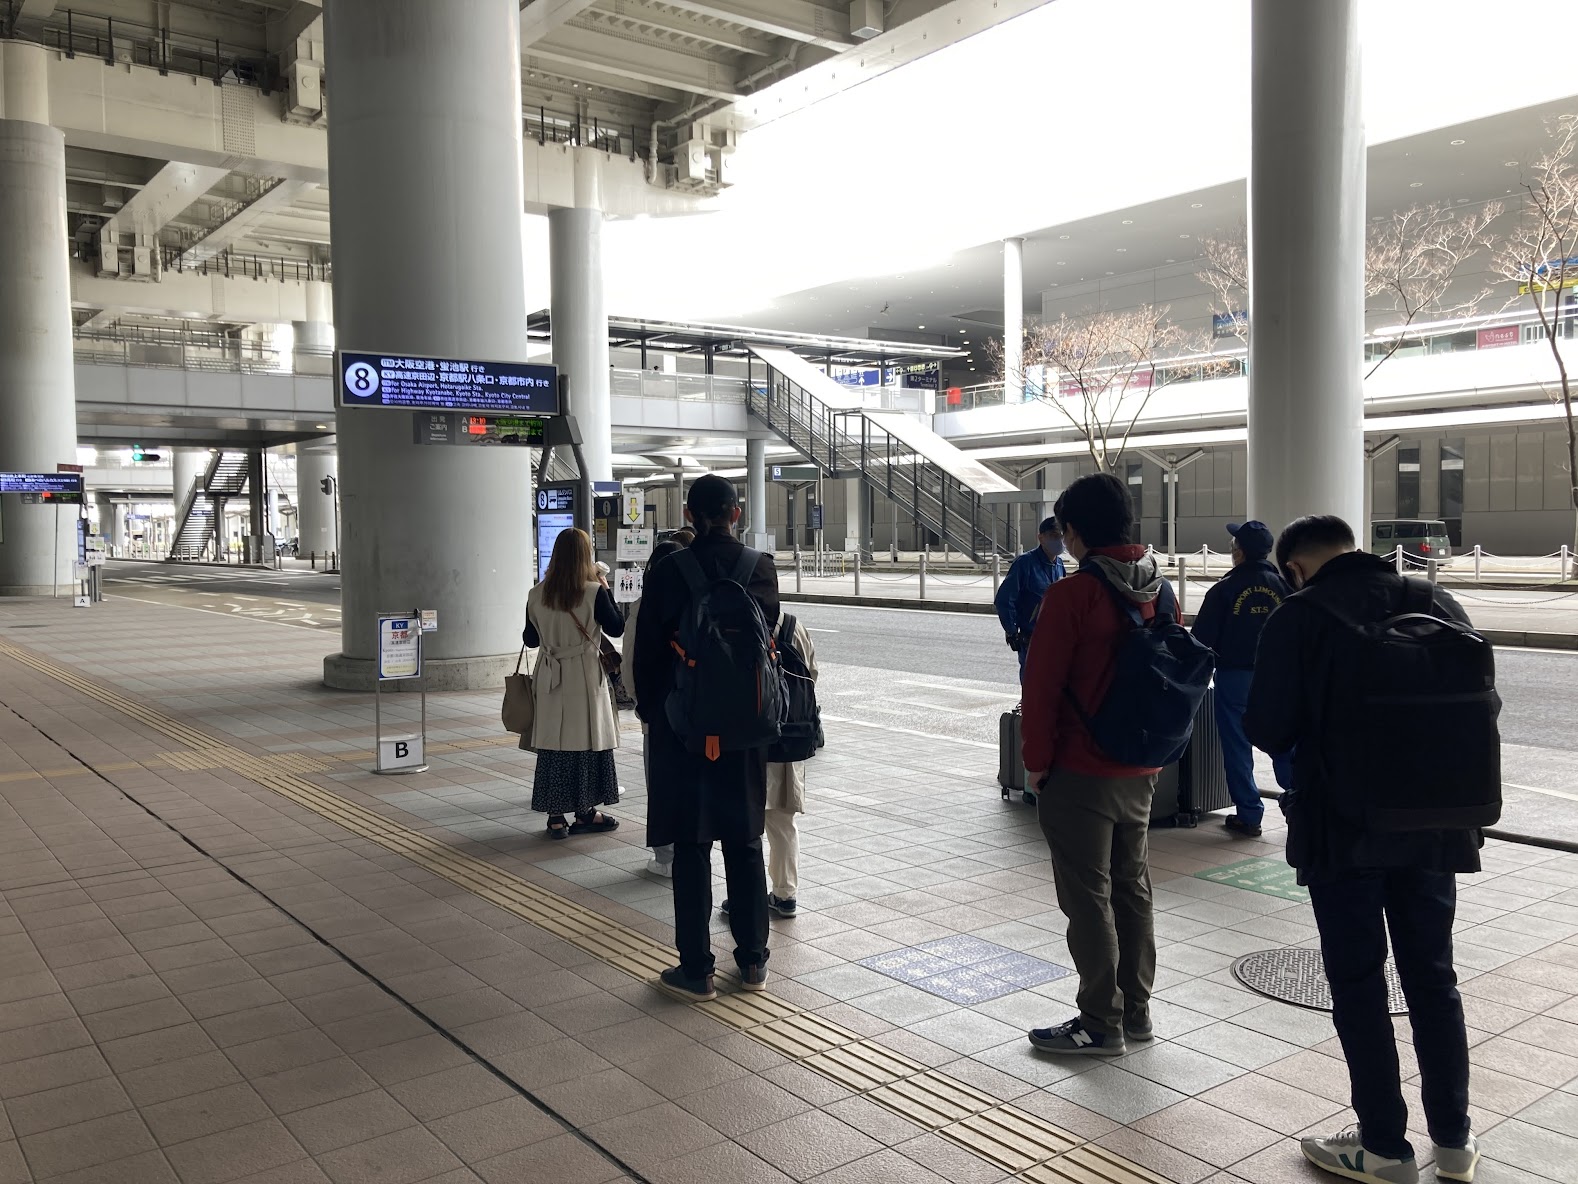 Kansai Airport limousine bus stop for Kyoto area